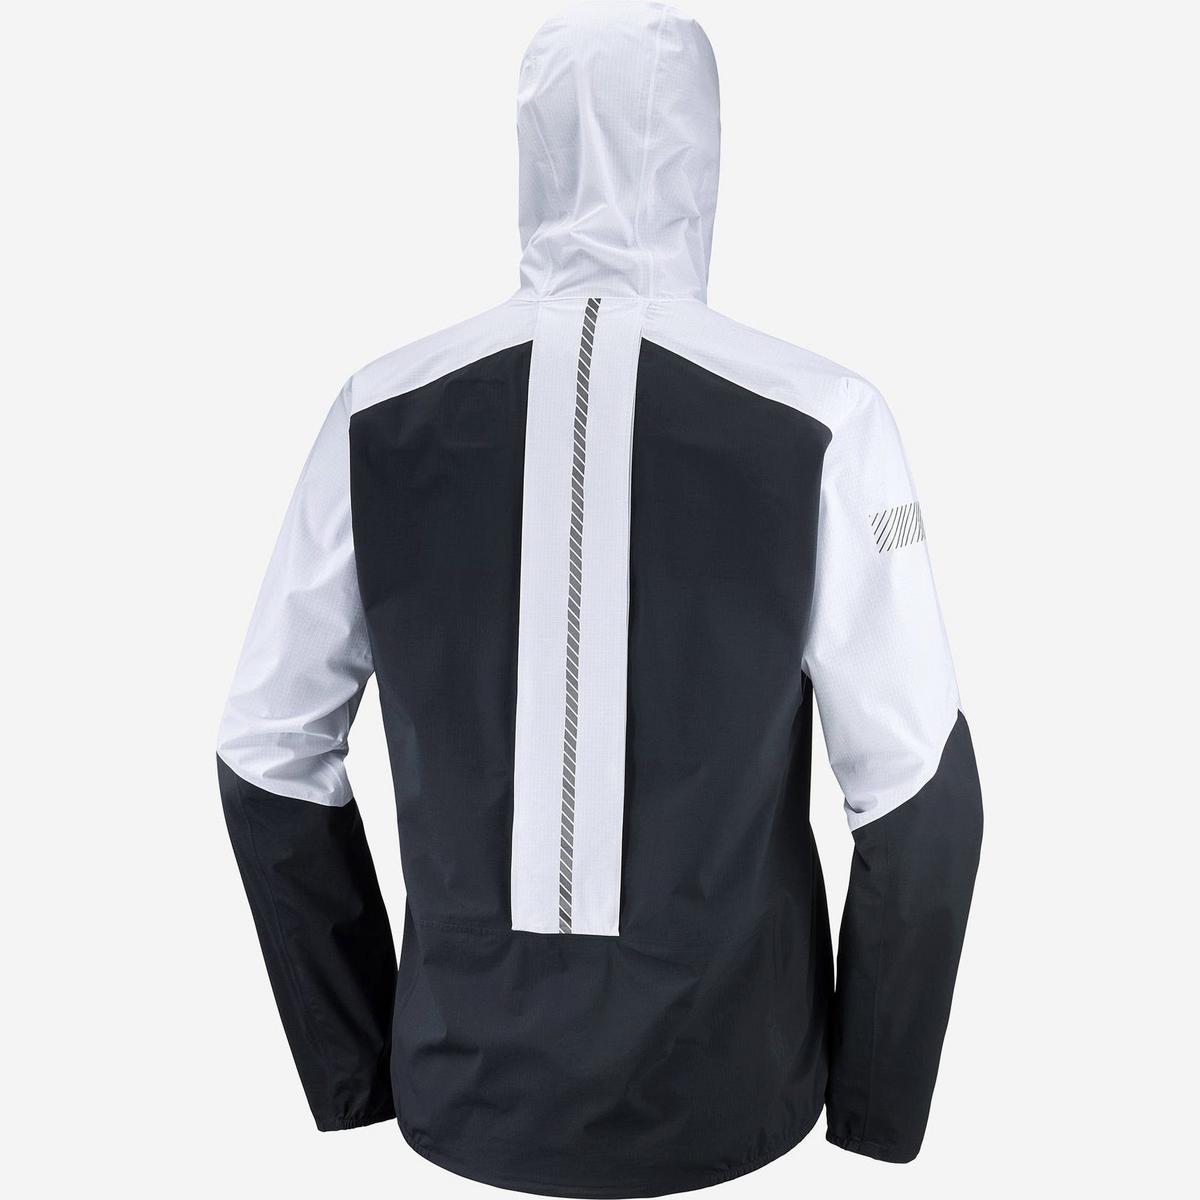 Salomon Men's Bonatti Trail Jacket - White/Black